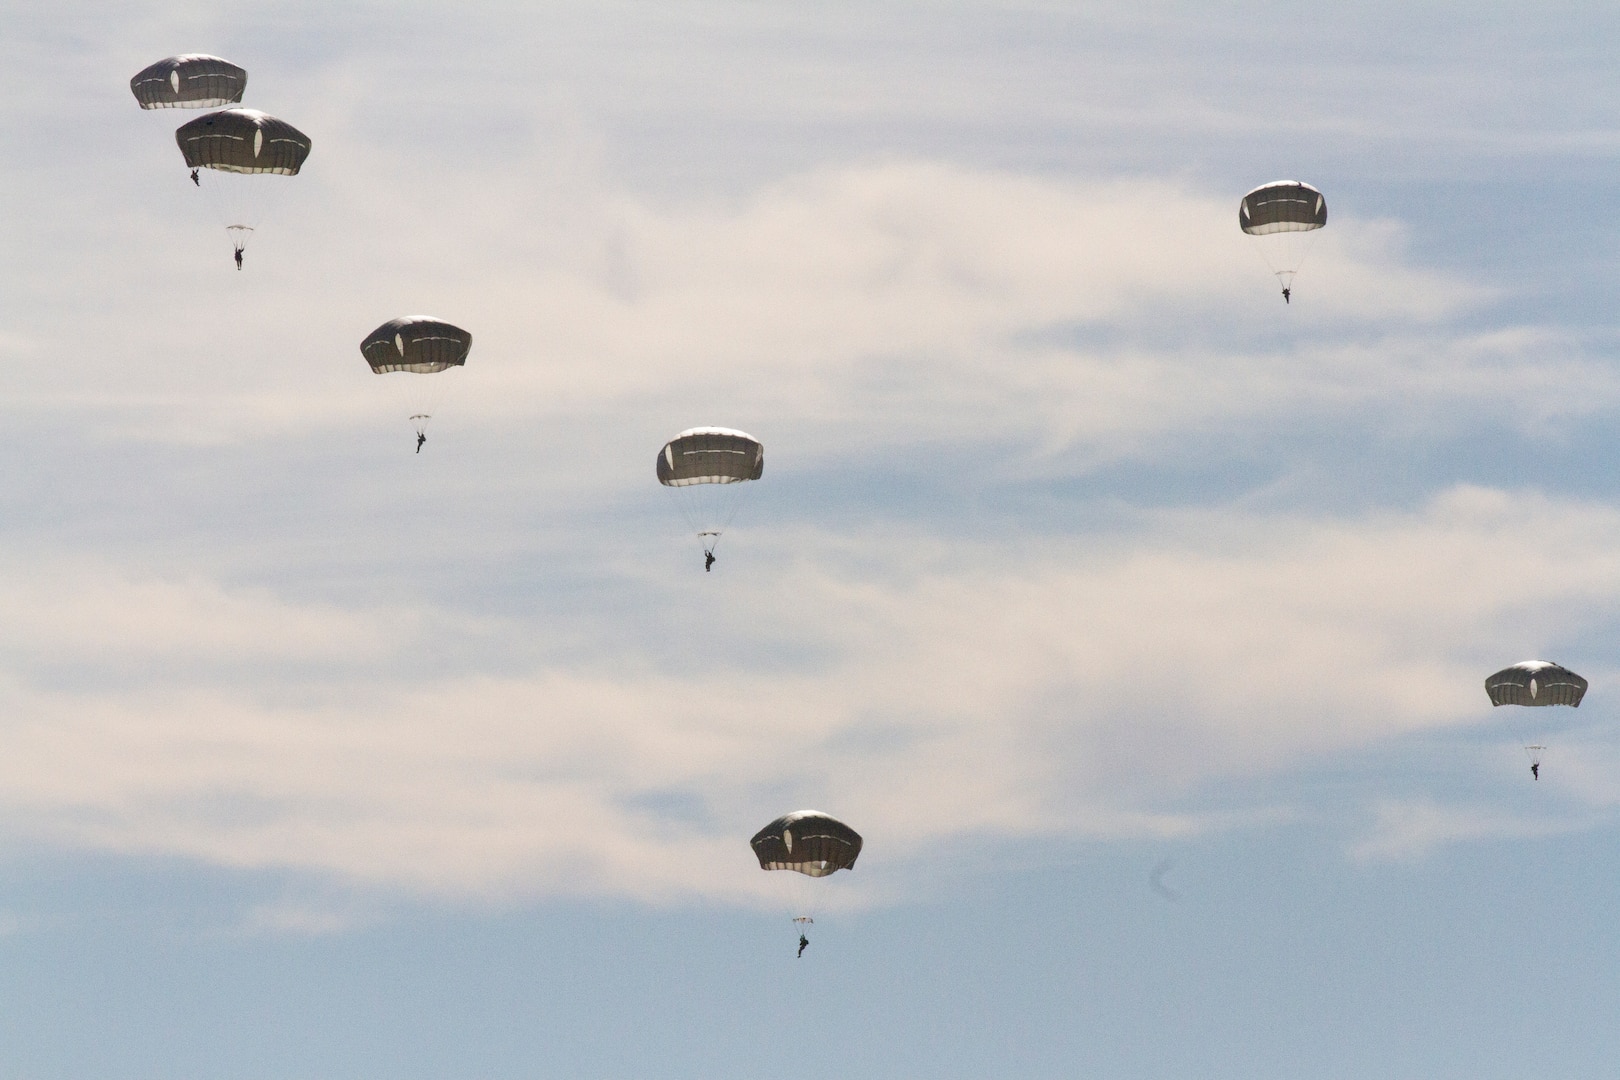 Airborne Soldiers deploy parachutes during airborne drop training.